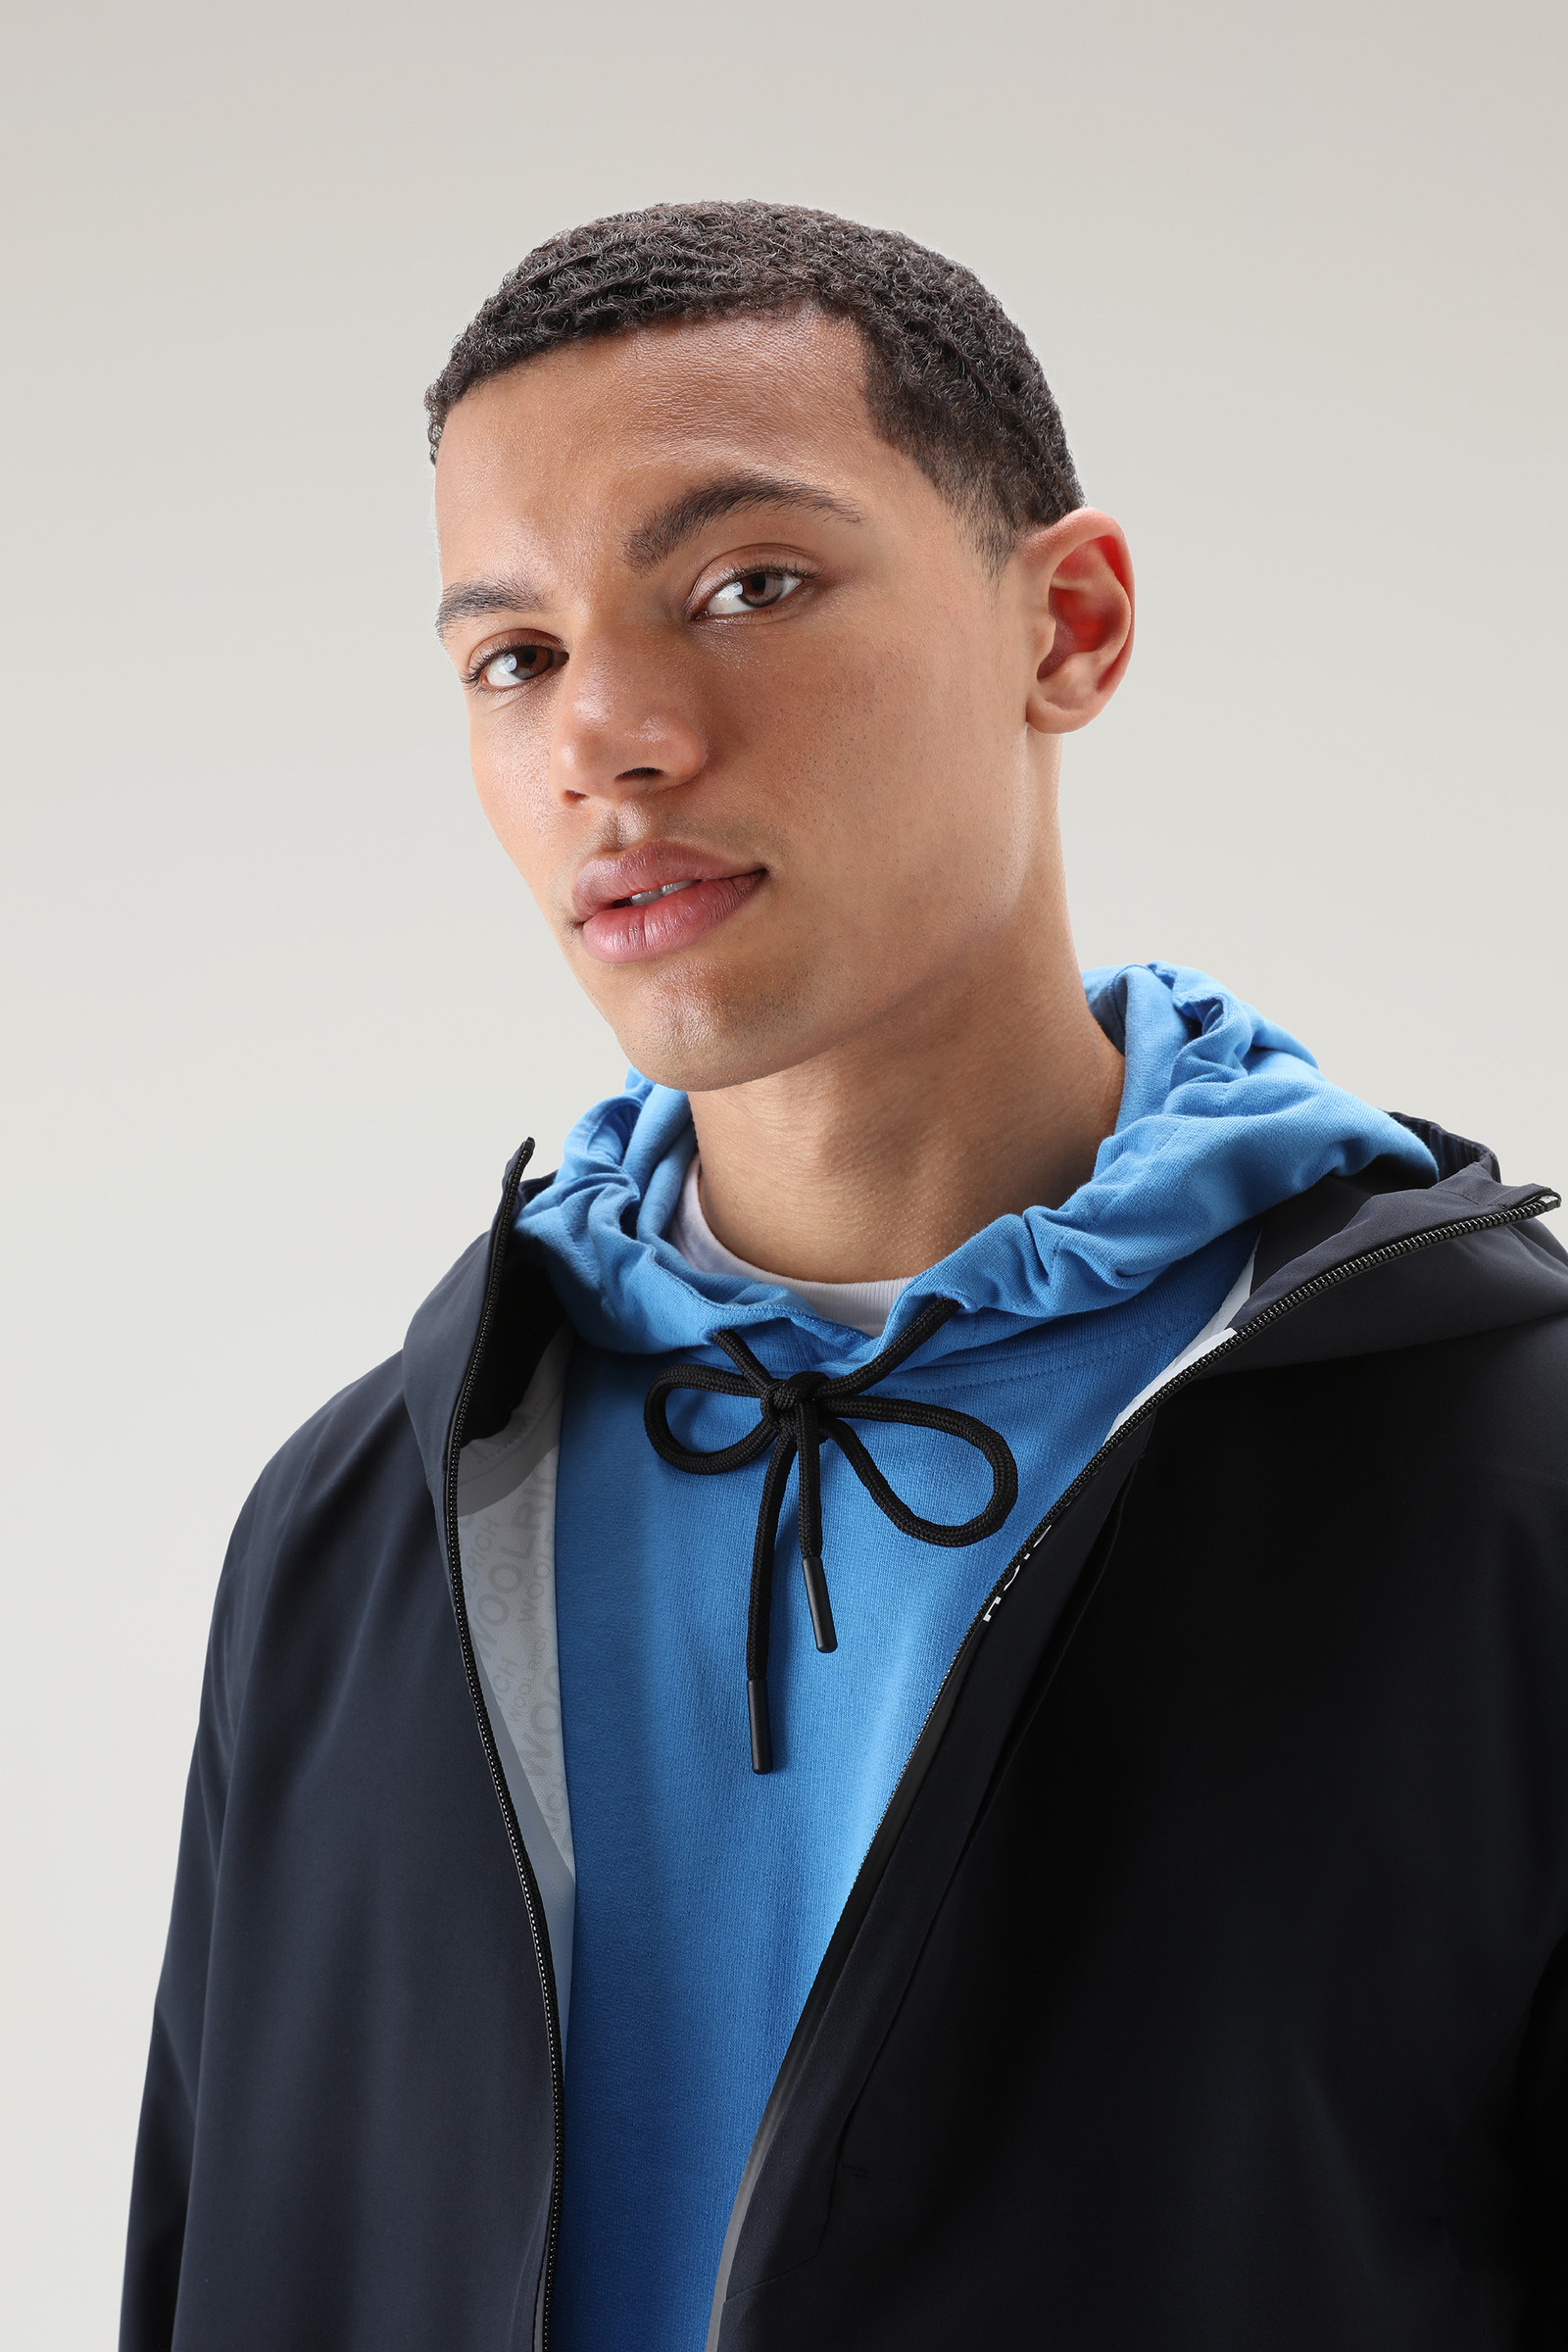 Men's Waterproof Pacific Hooded Jacket Blue | Woolrich USA